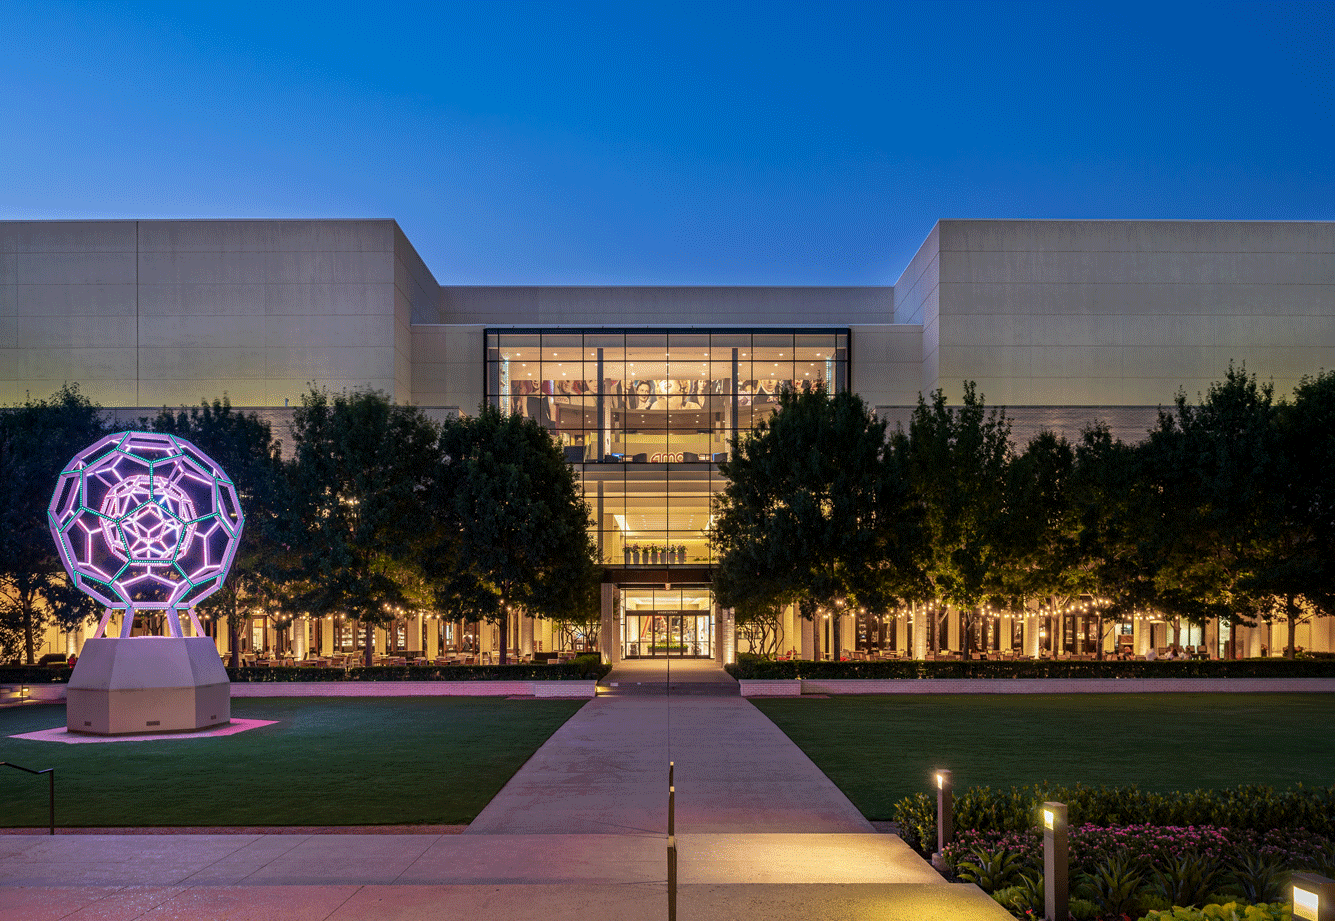 NorthPark Center in Dallas, Texas Editorial Image - Image of atrium,  lifestyle: 78352510